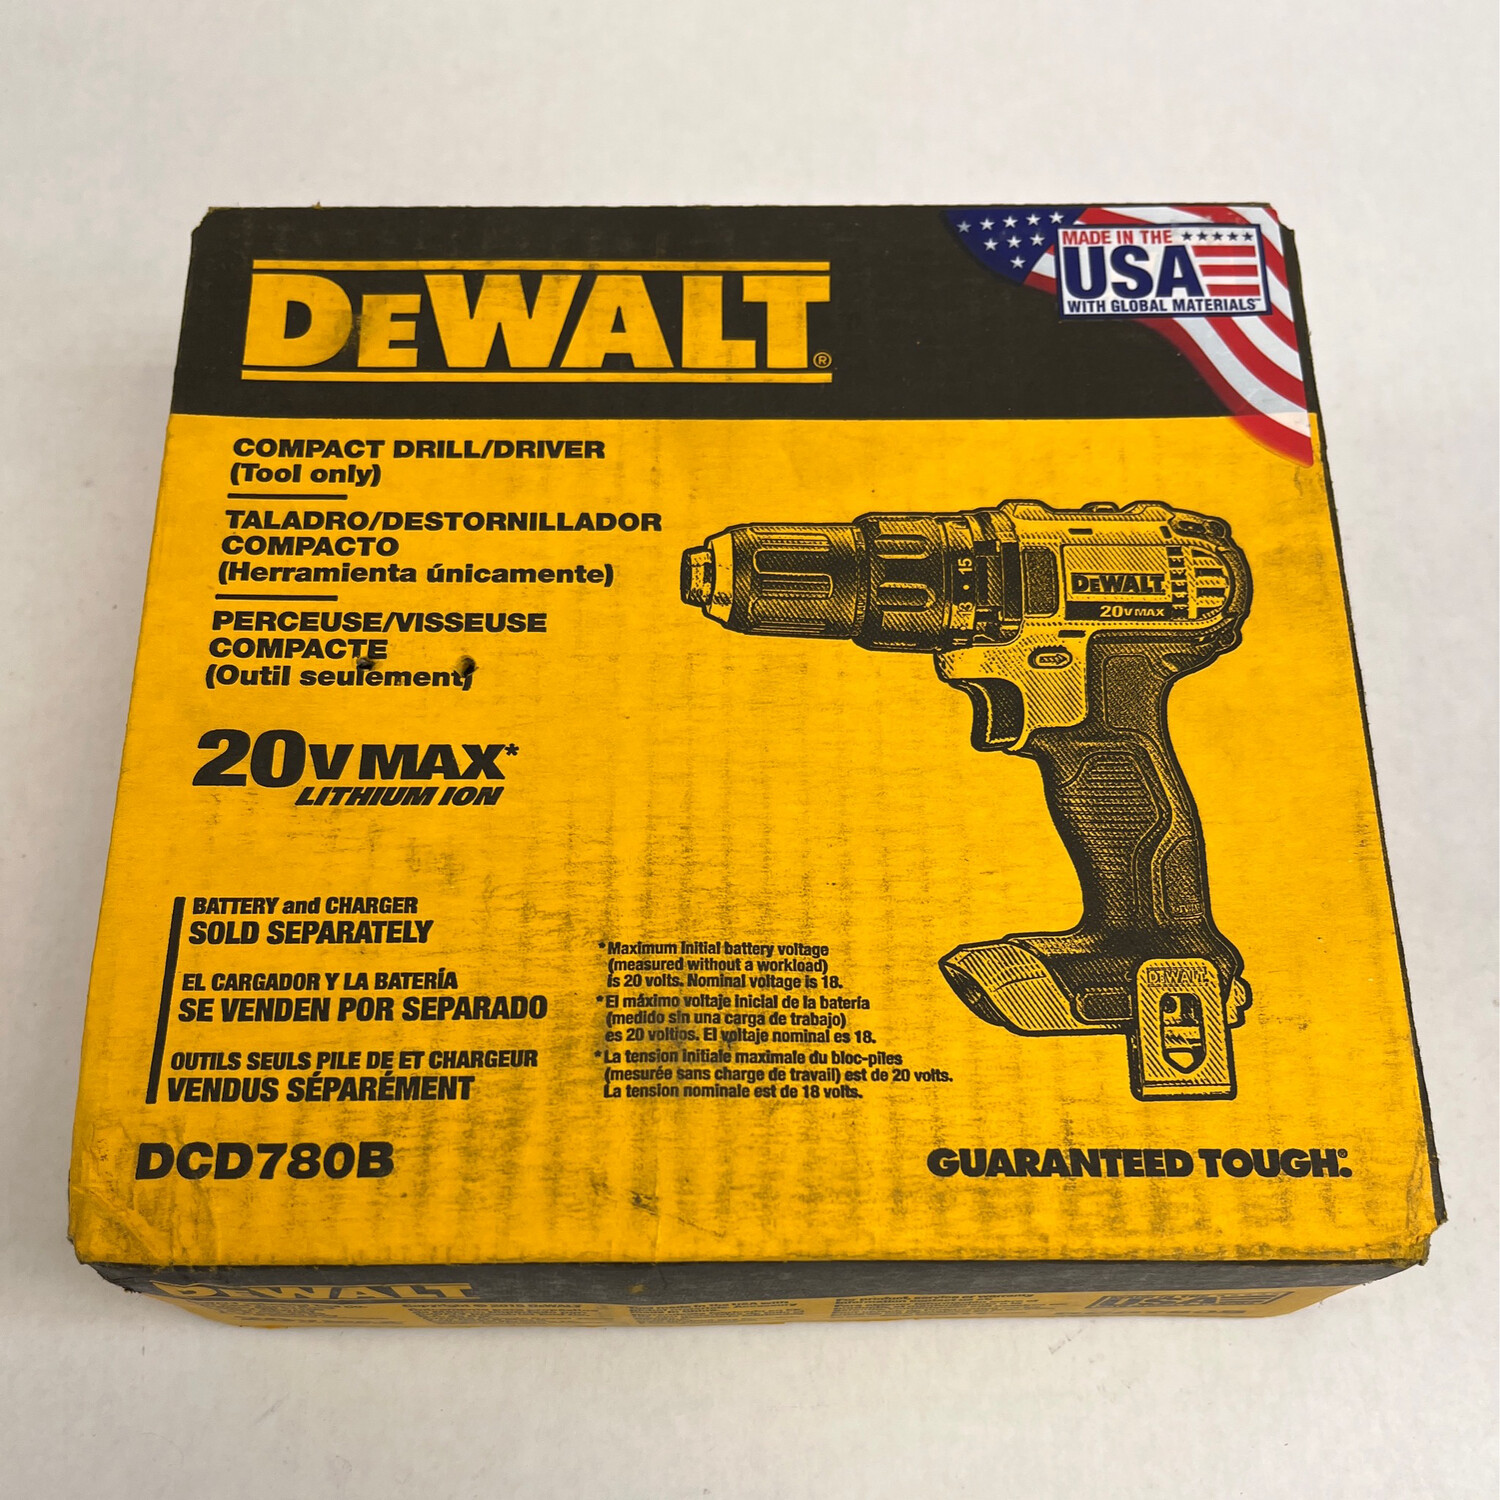 Dewalt Compact Drill/Driver (Tool Only) DCD780B